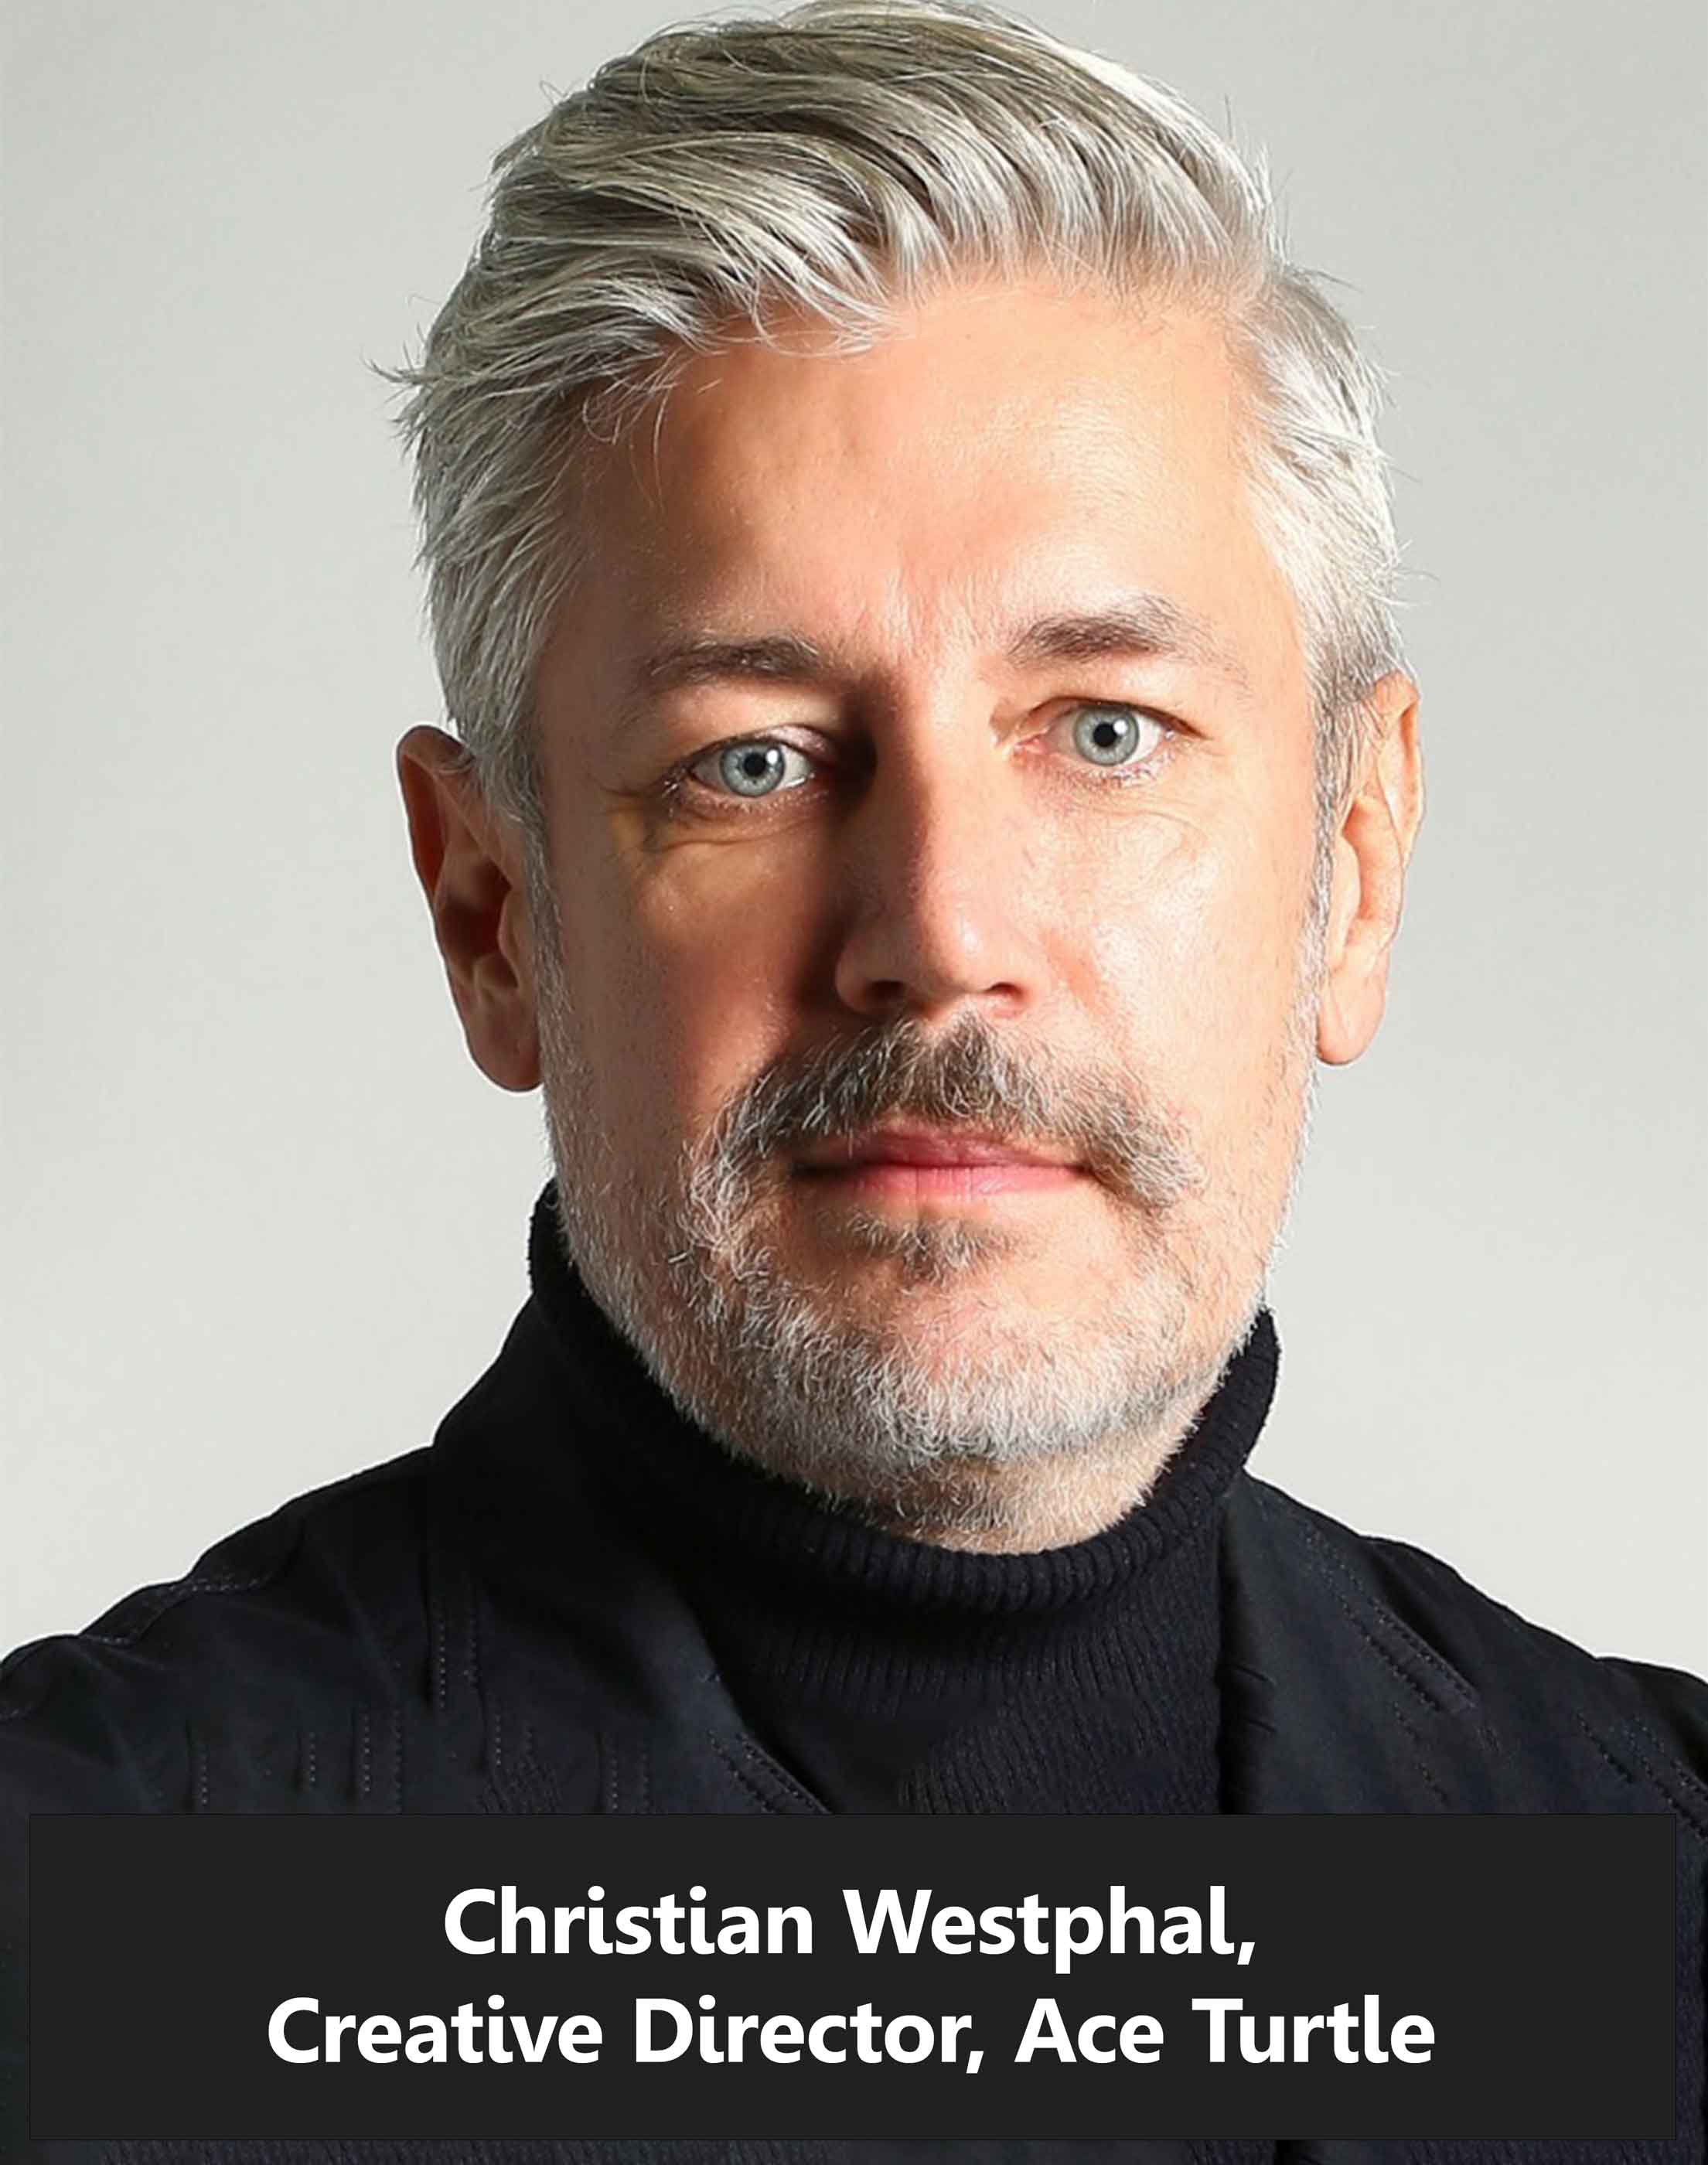 Christian-Westphal-Creative-Director-ace-turtle